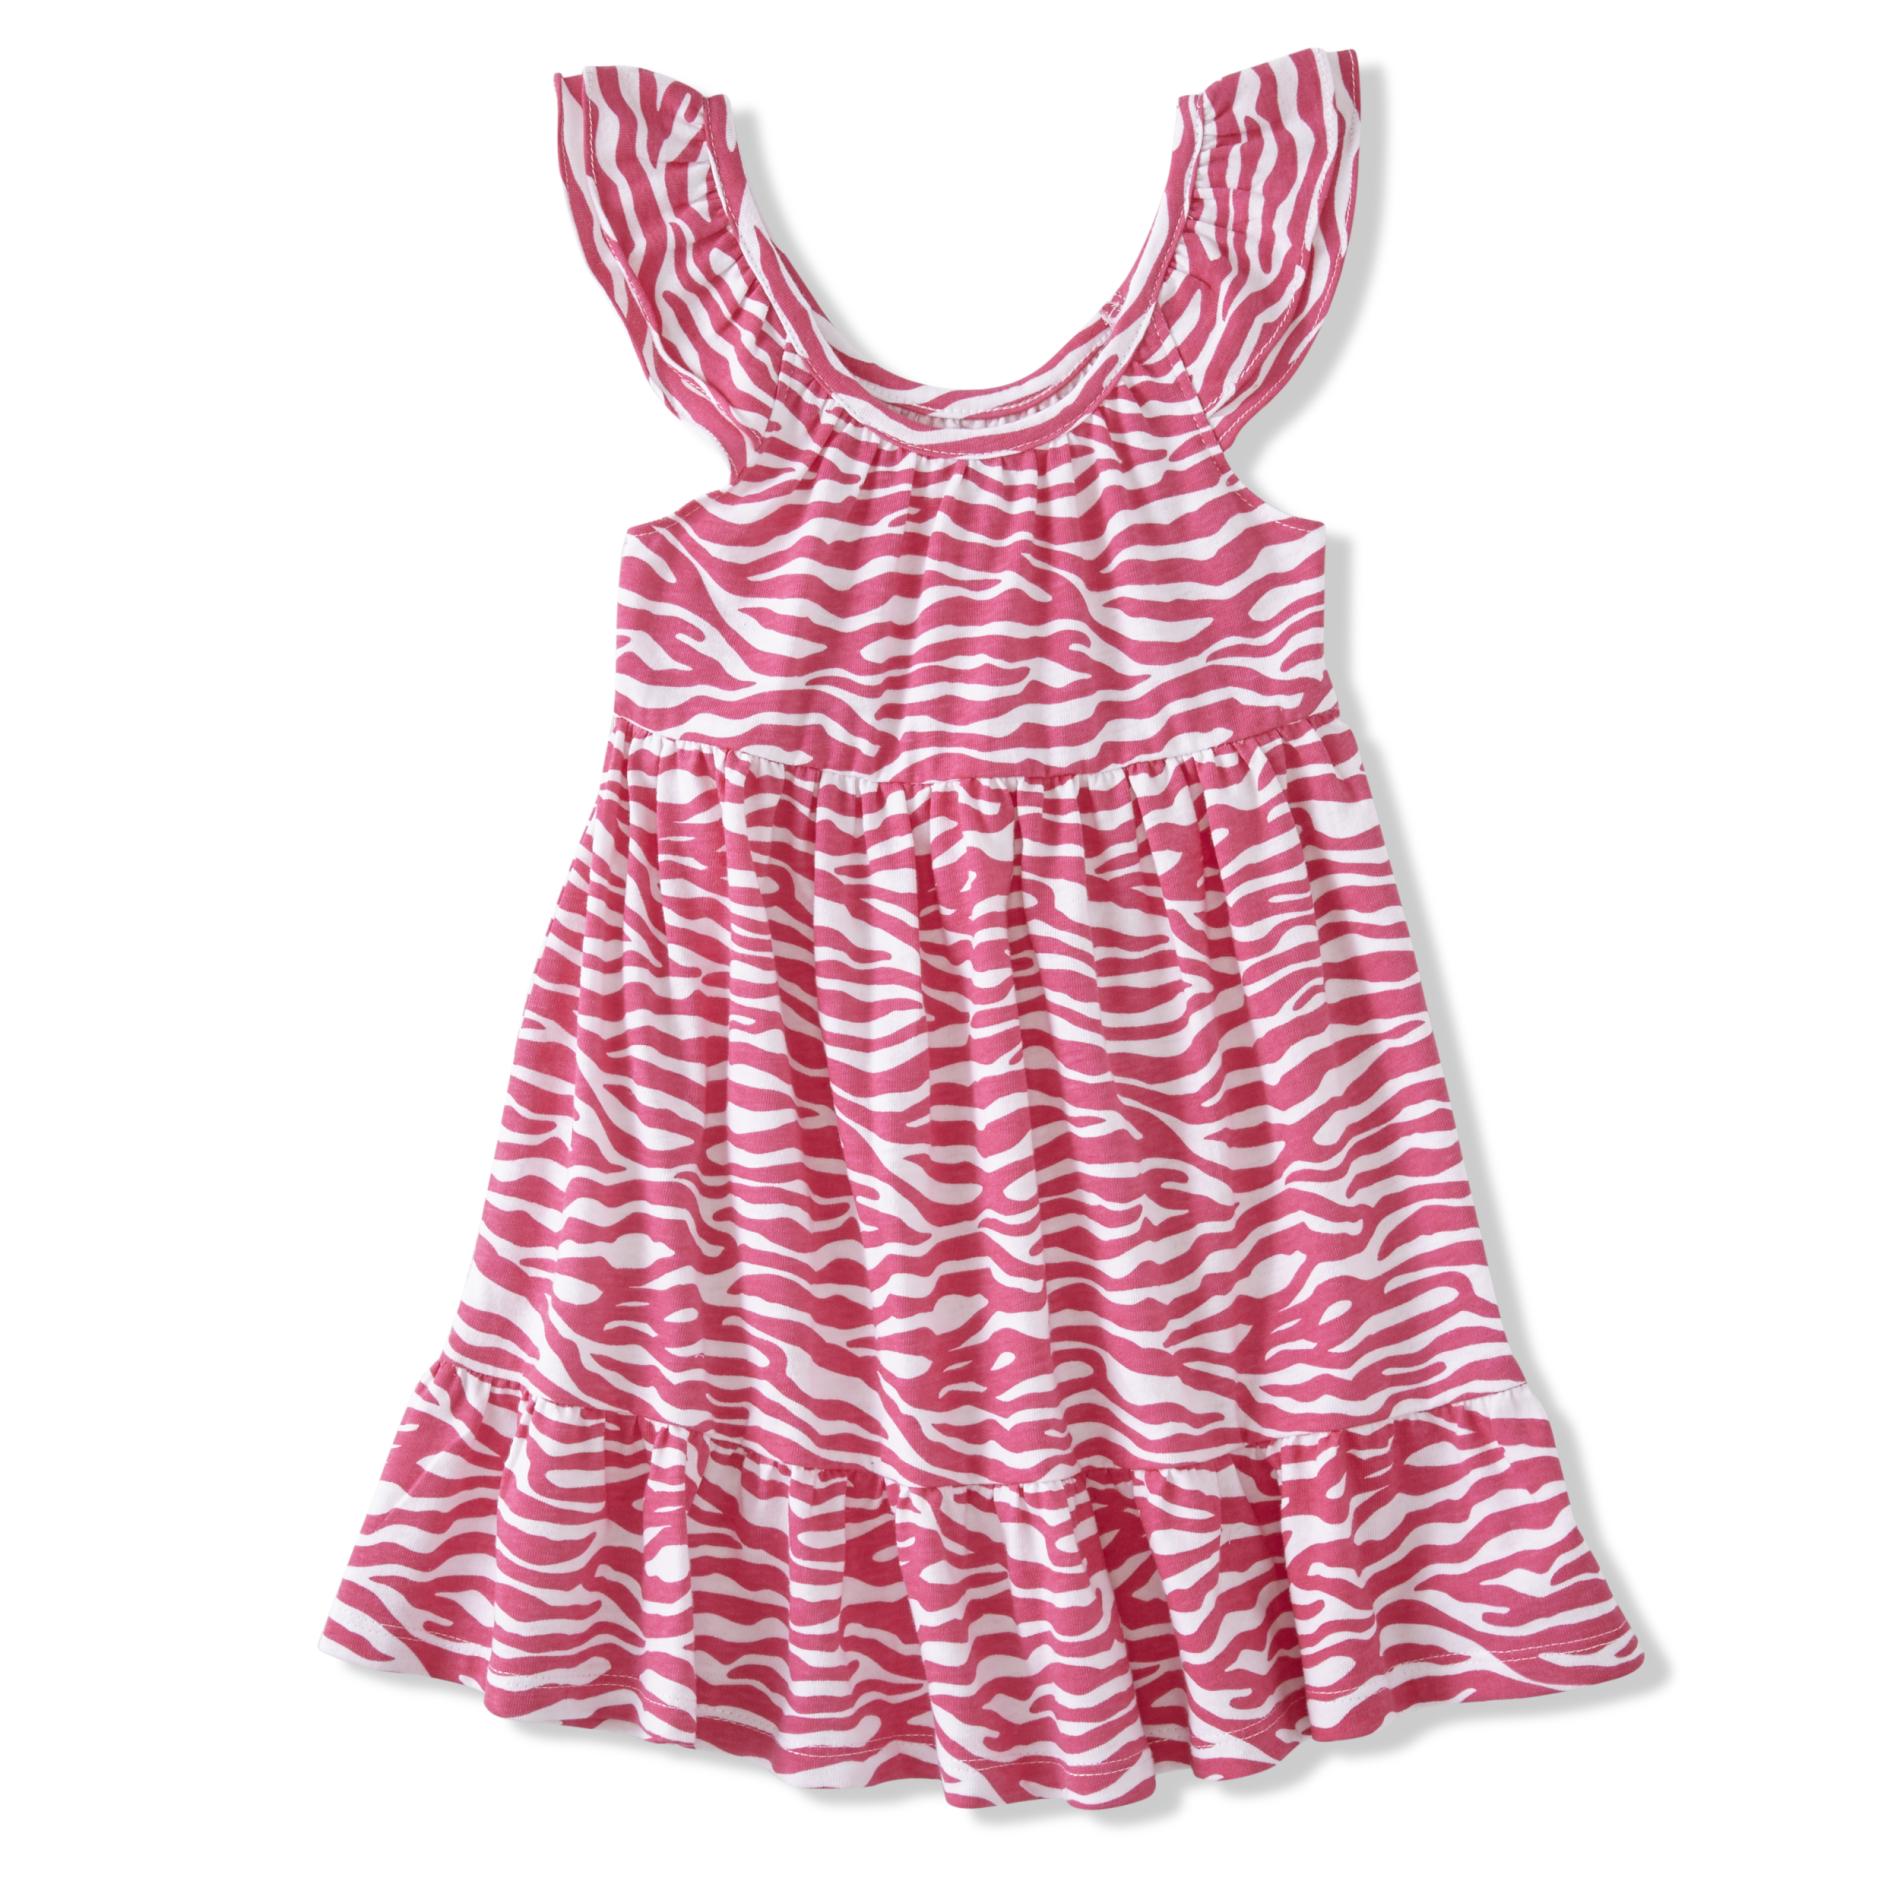 Toughskins Toddler & Infant Girls' Flutter Sleeve Dress - Animal Print